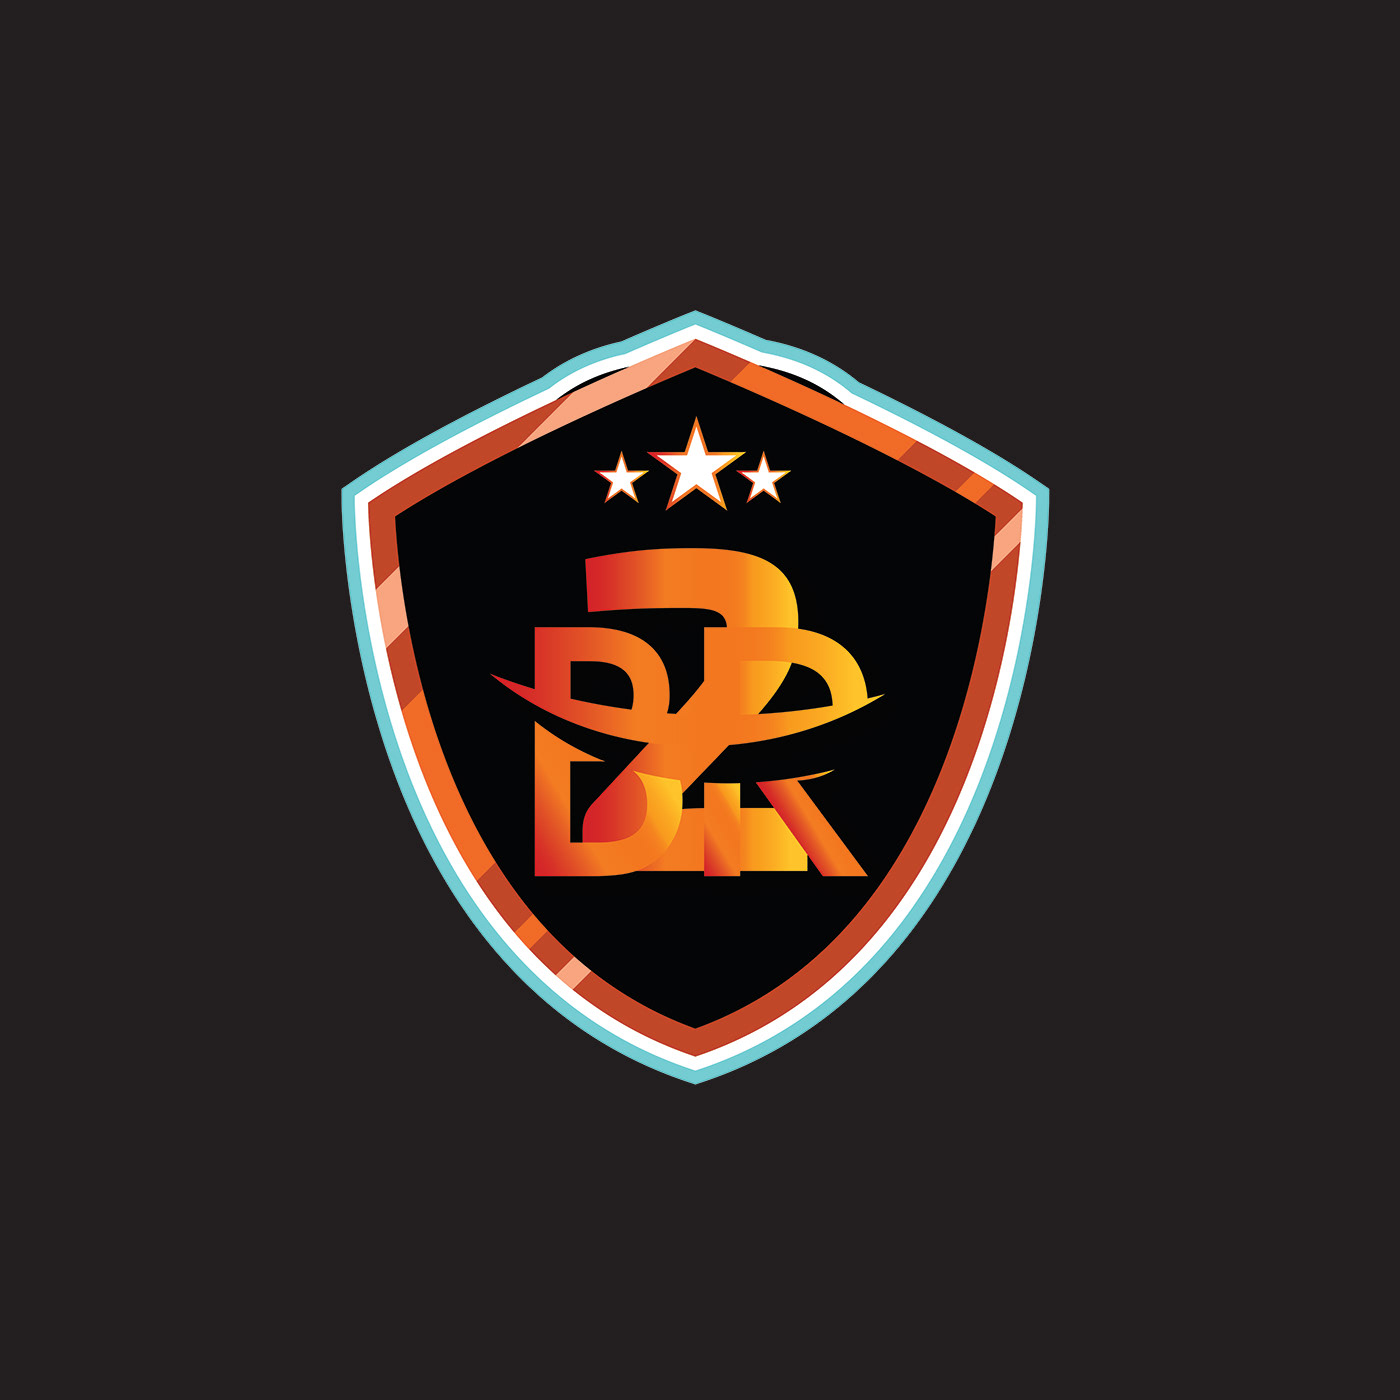 Gambar rrq logo hd